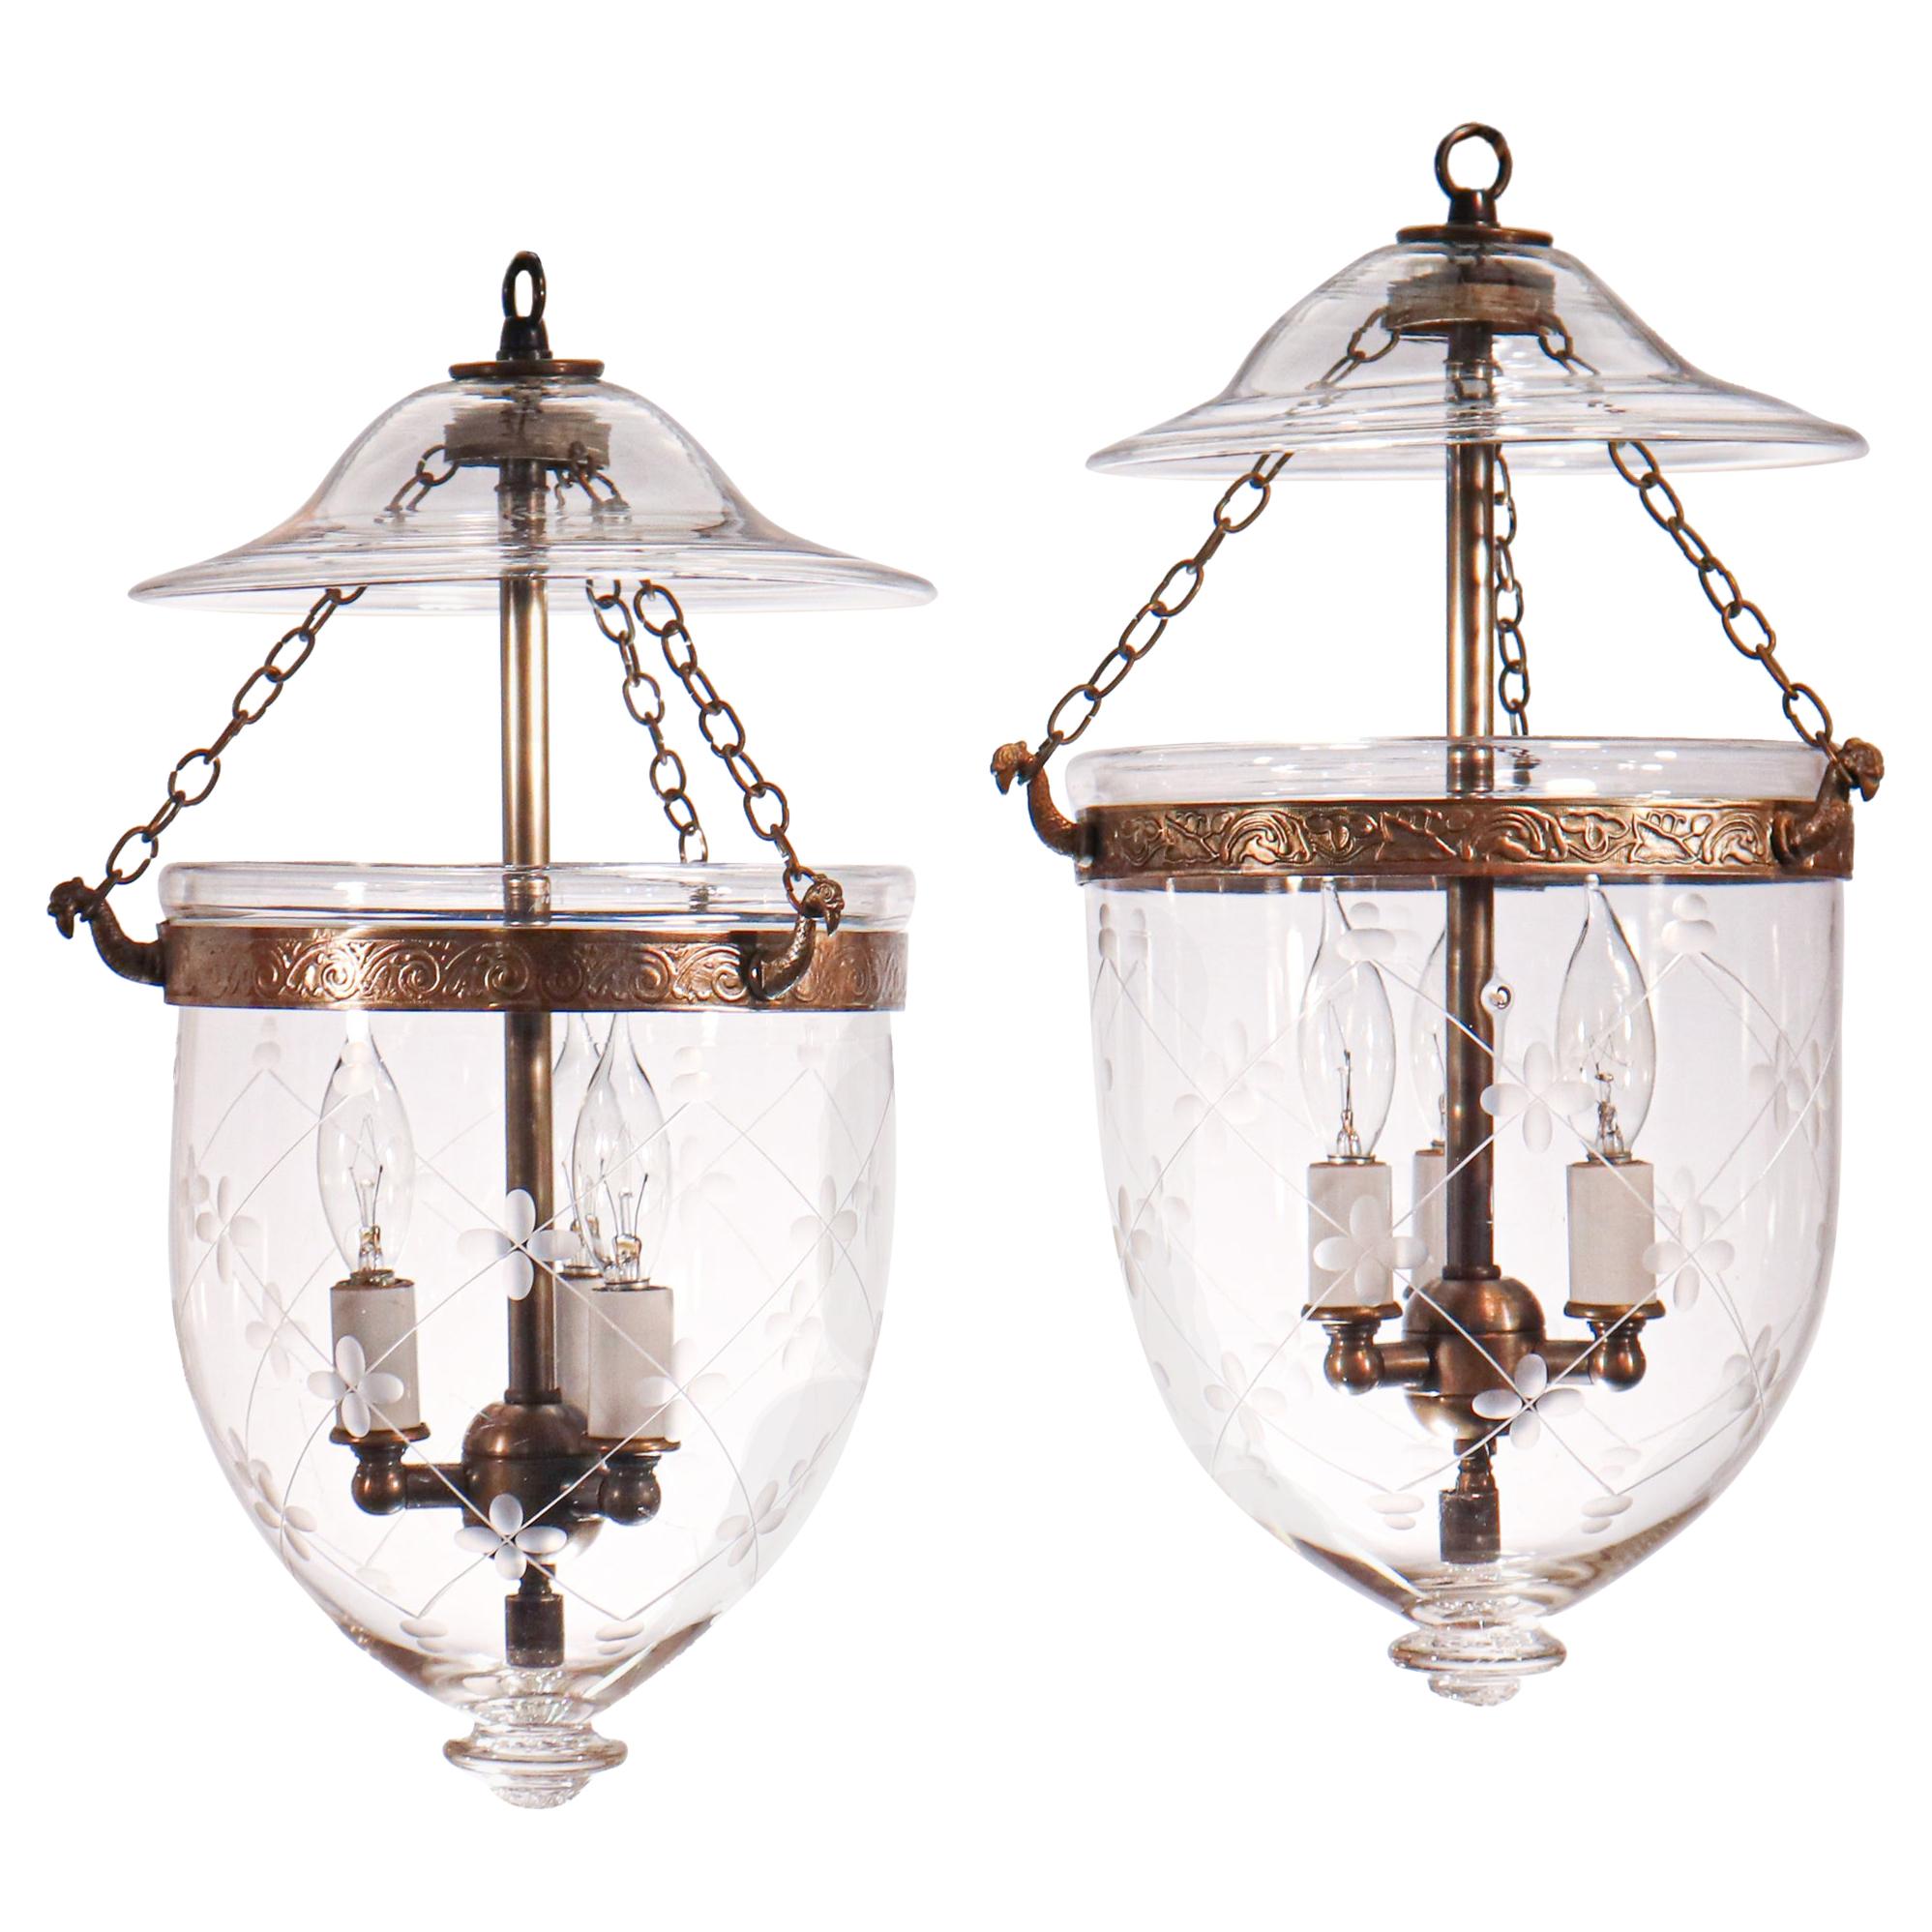 Pair of Antique Petite Bell Jar Lanterns with Trellis Etching